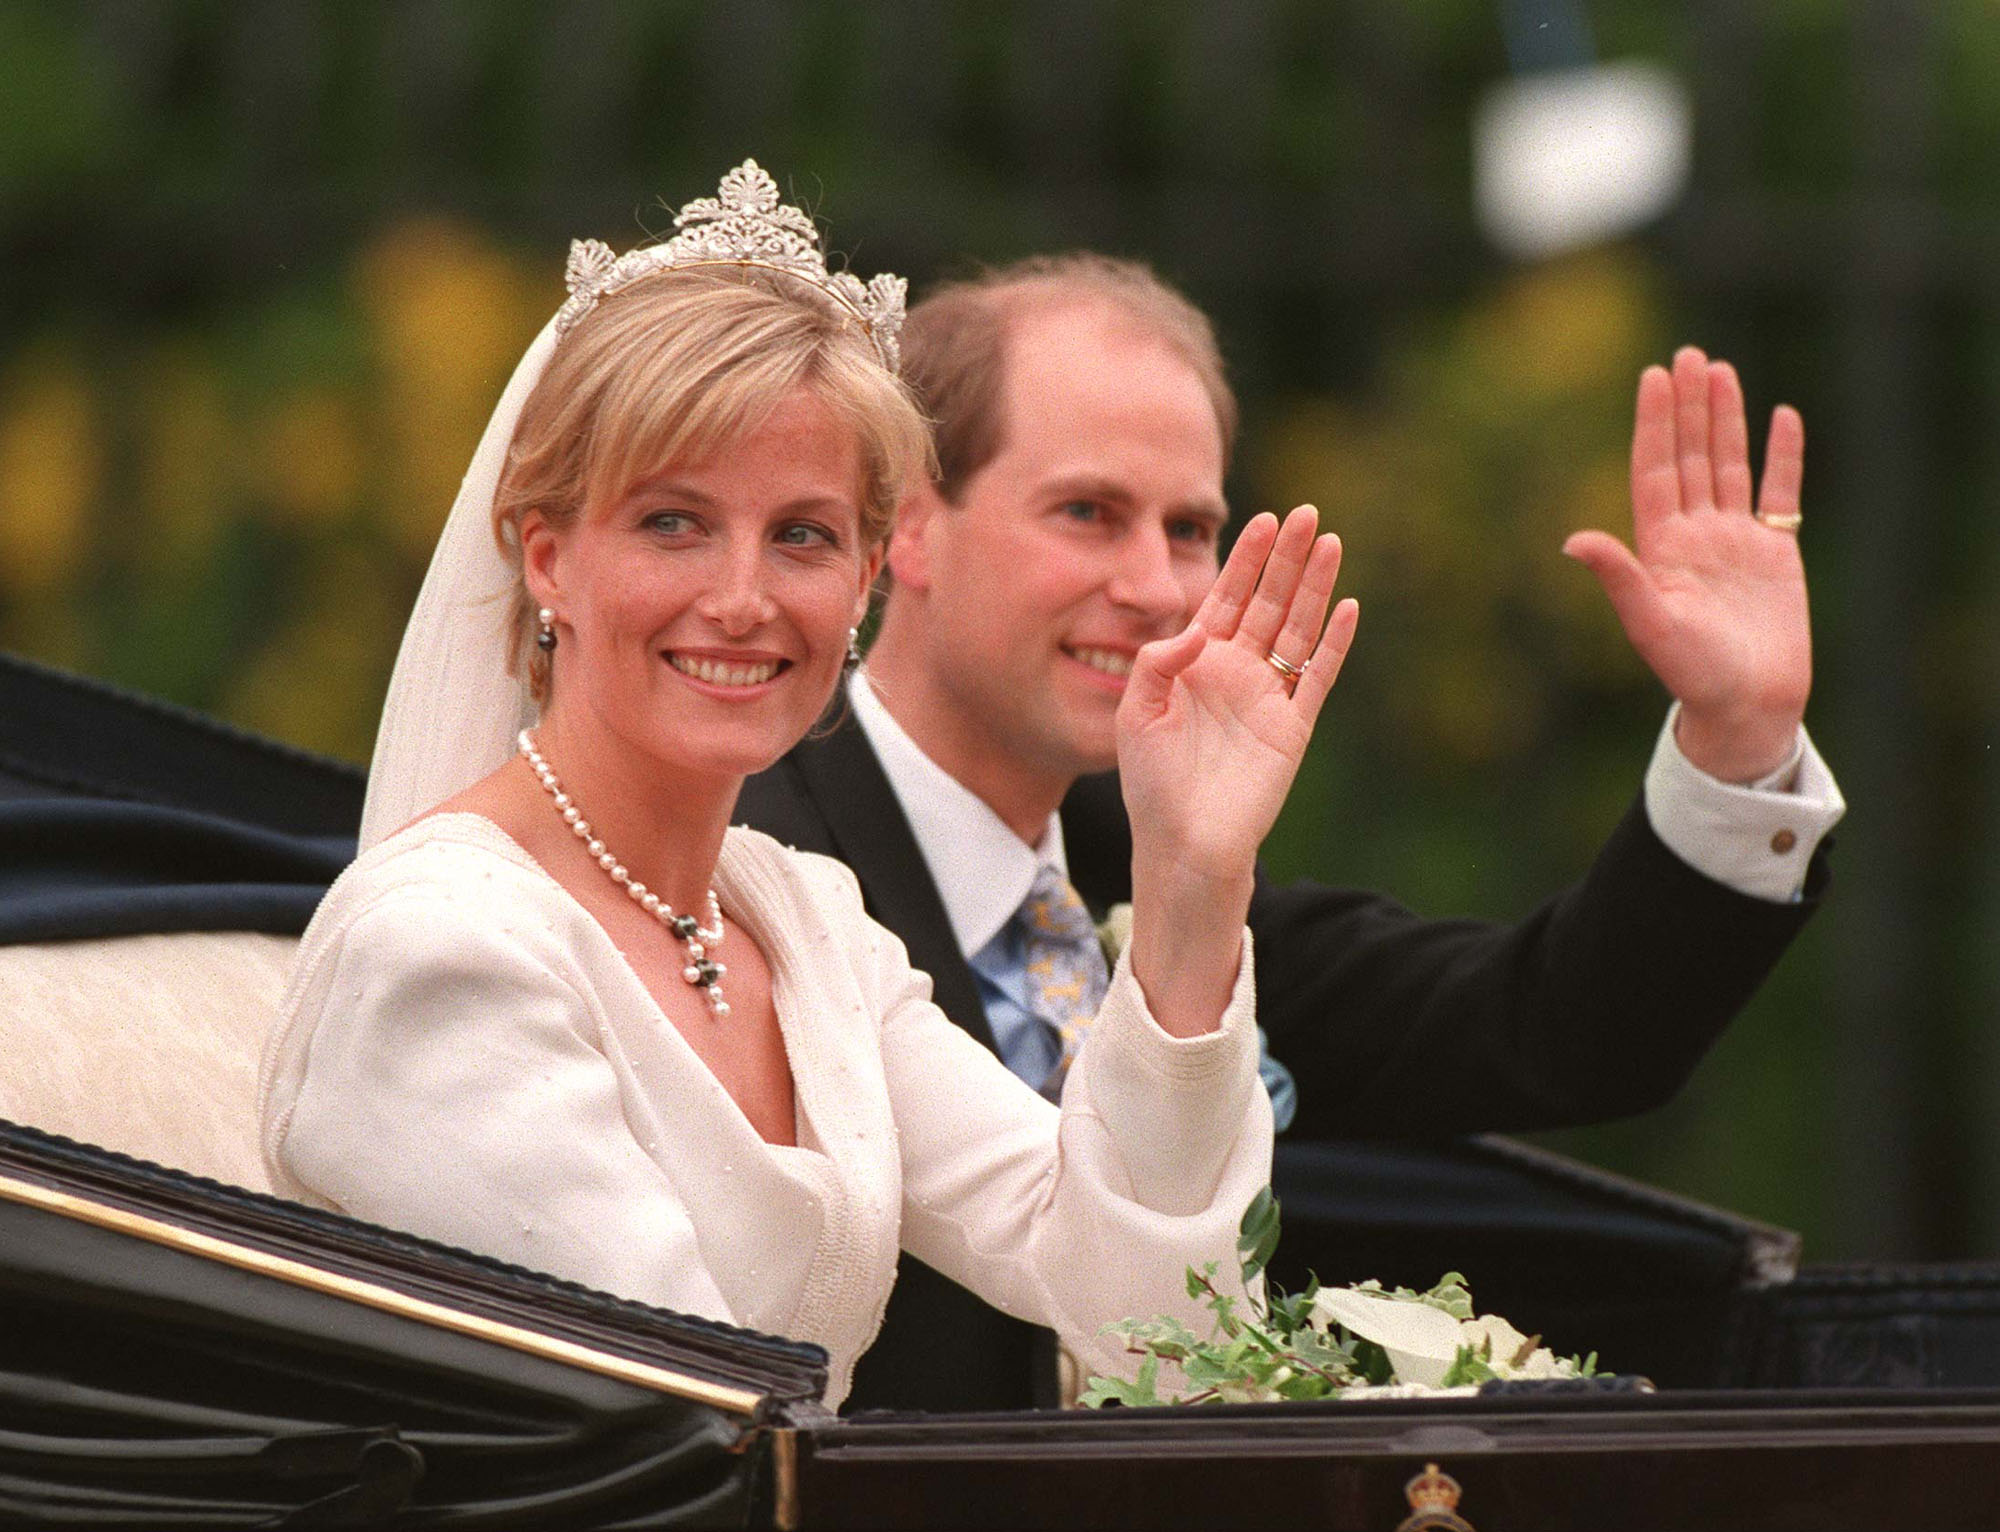 Prince Edward and Sophie Rhys-Jones' wedding